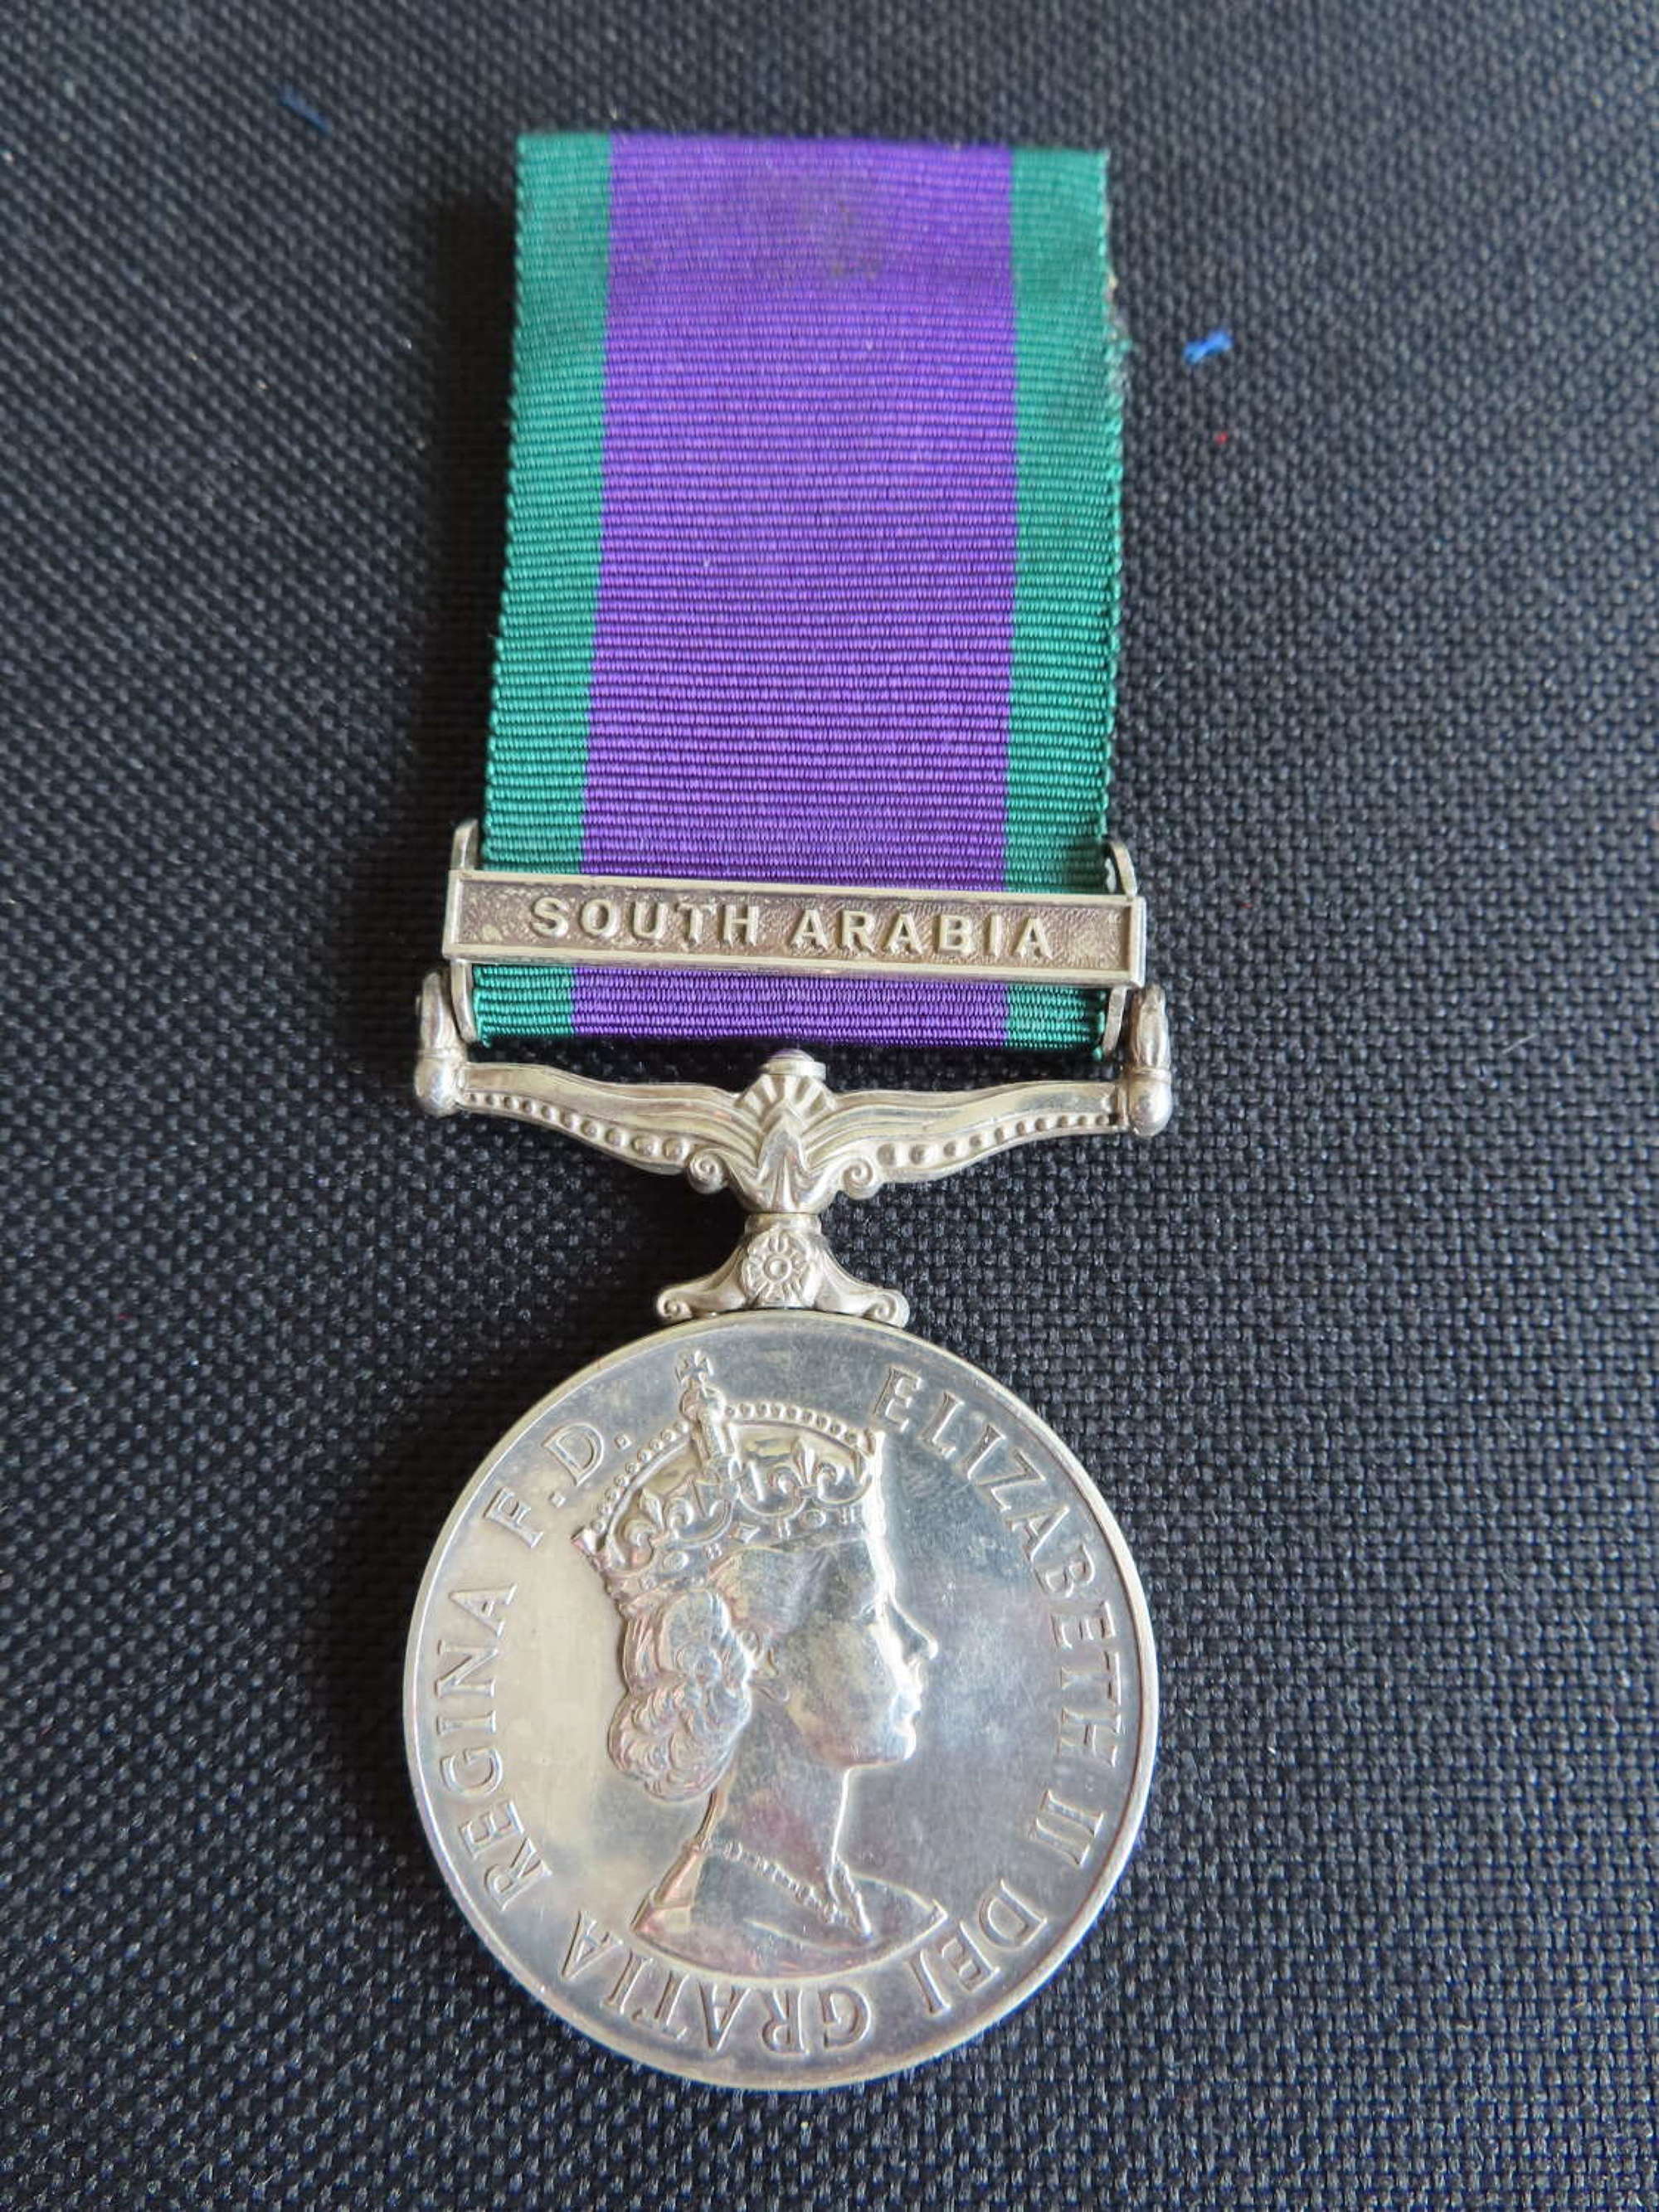 South Arabia campaign service medal awarded to Spr Davidson R.E.